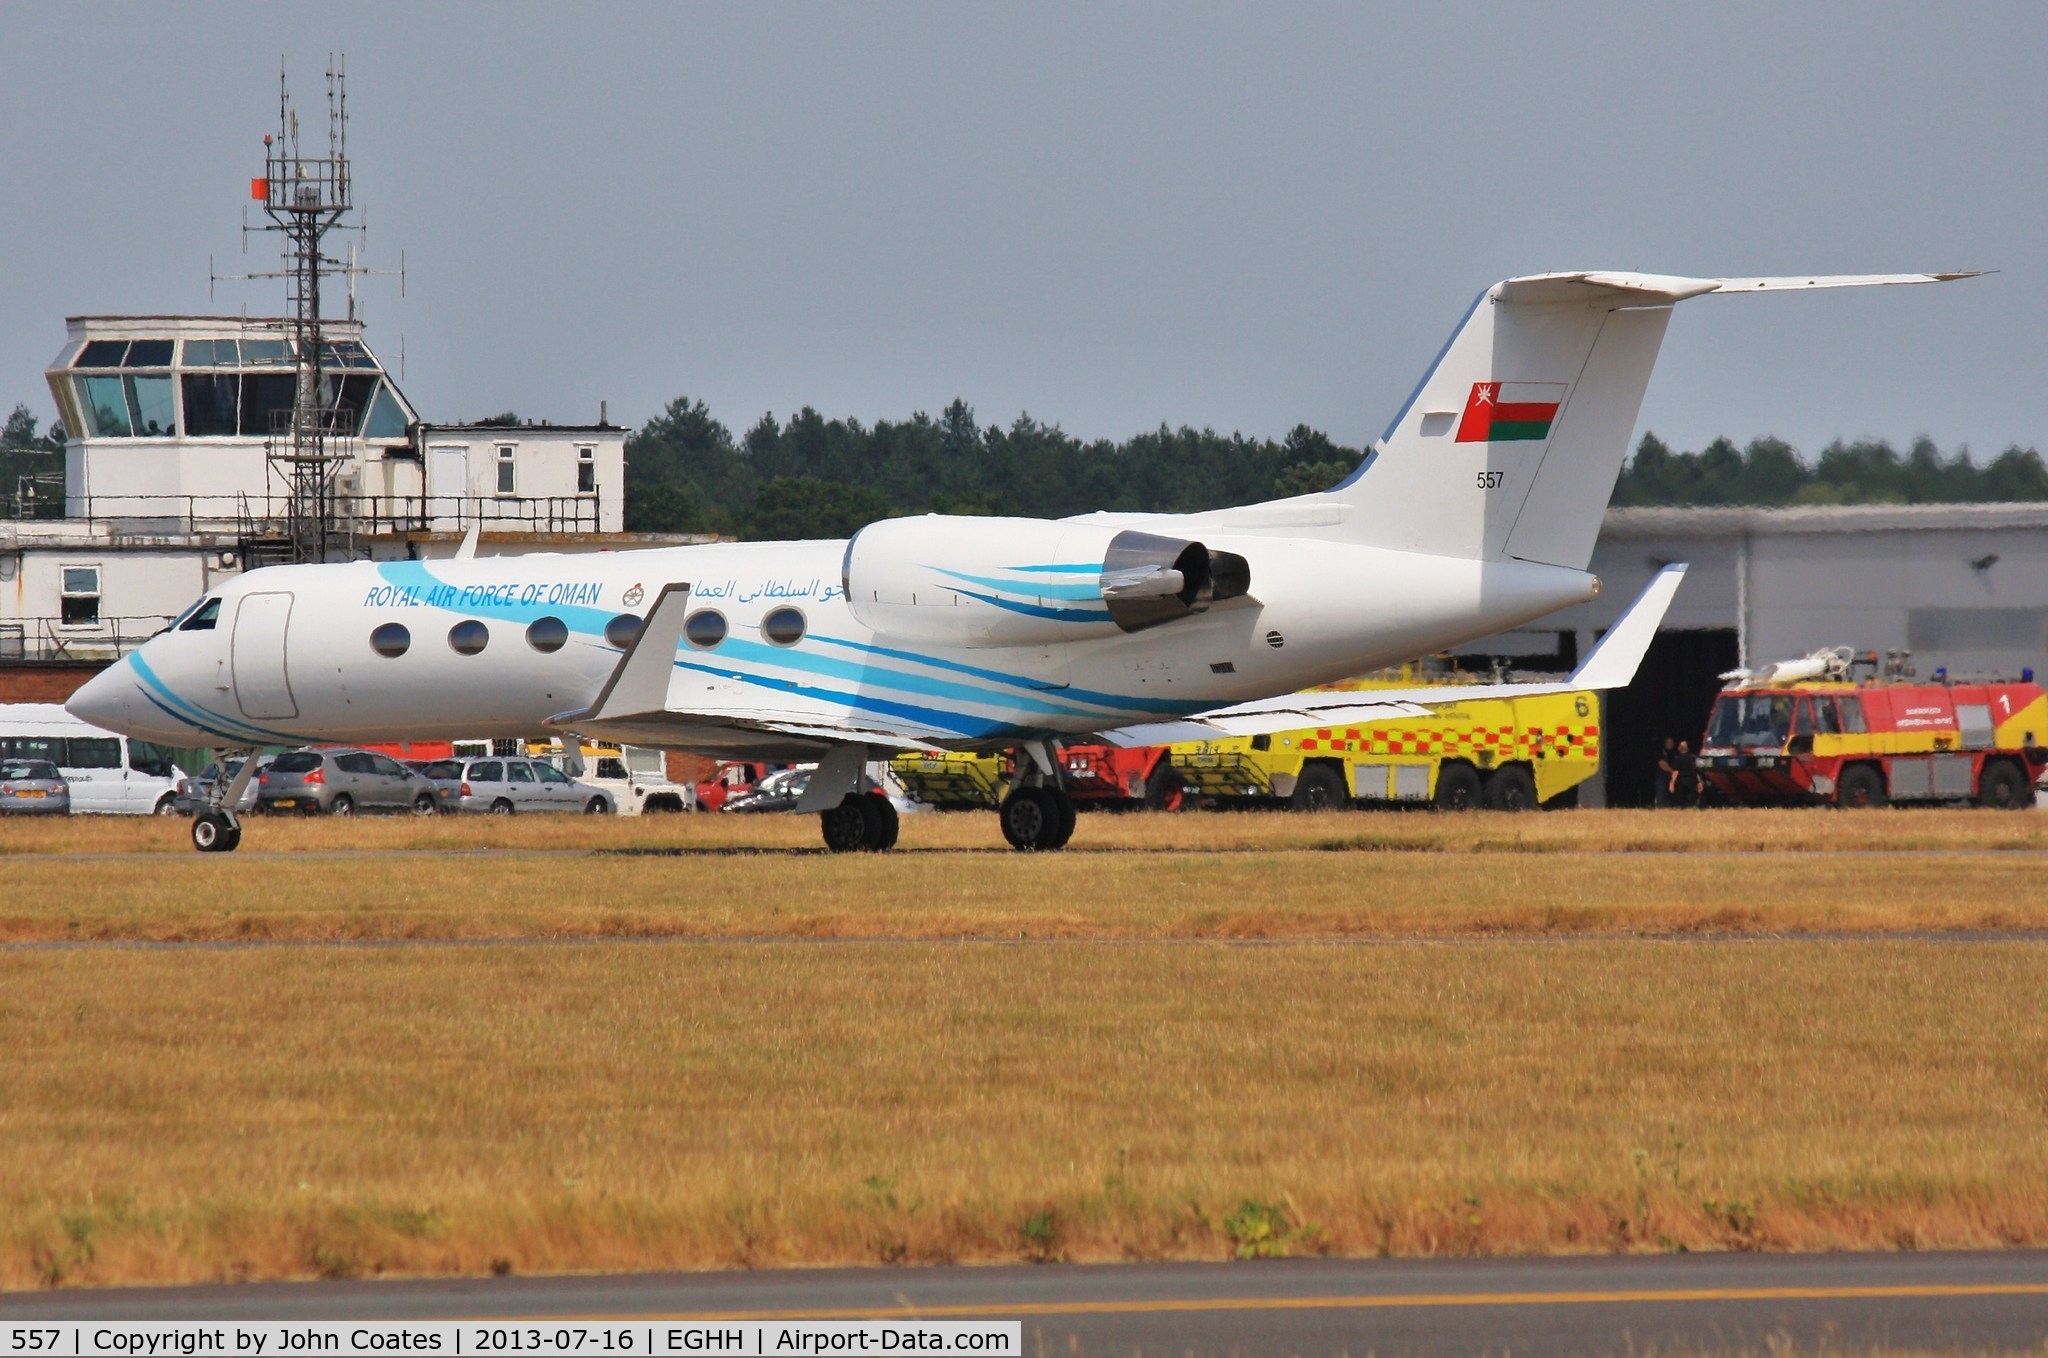 557, 1991 Gulfstream Aerospace Gulfstream IV C/N 1168, Overnight stop on way to RIAT 2013